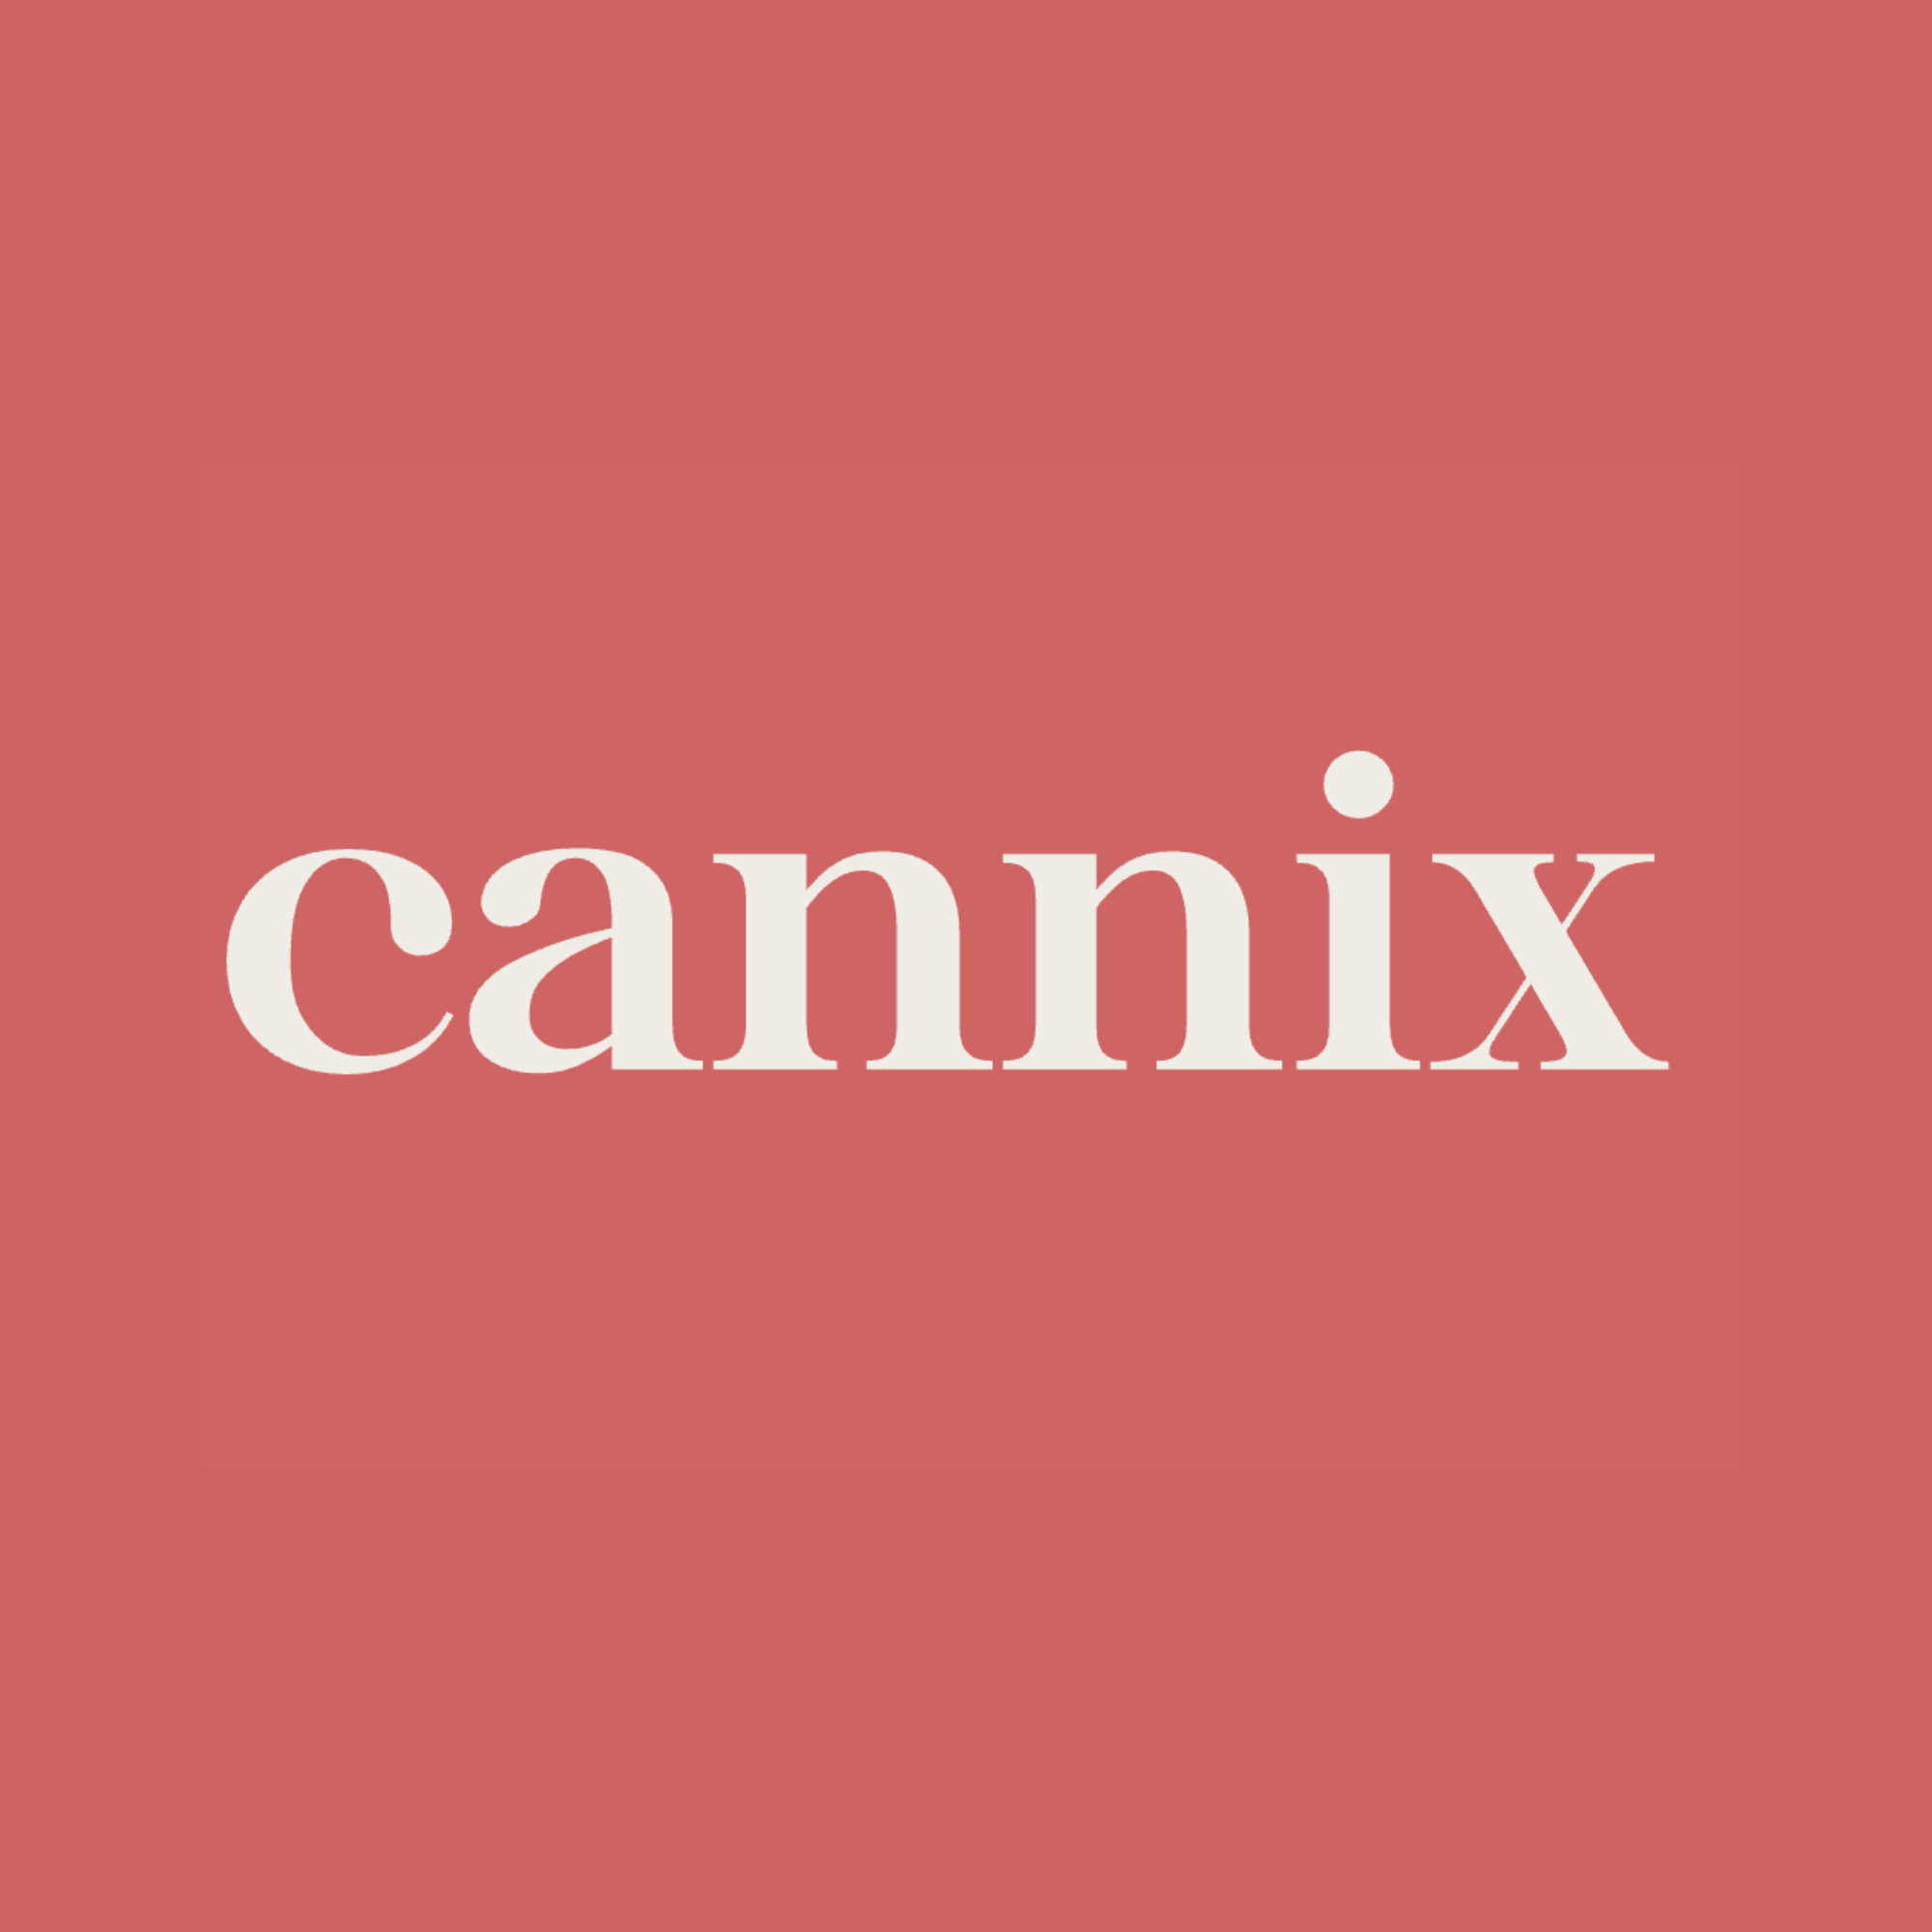 Cannix logo